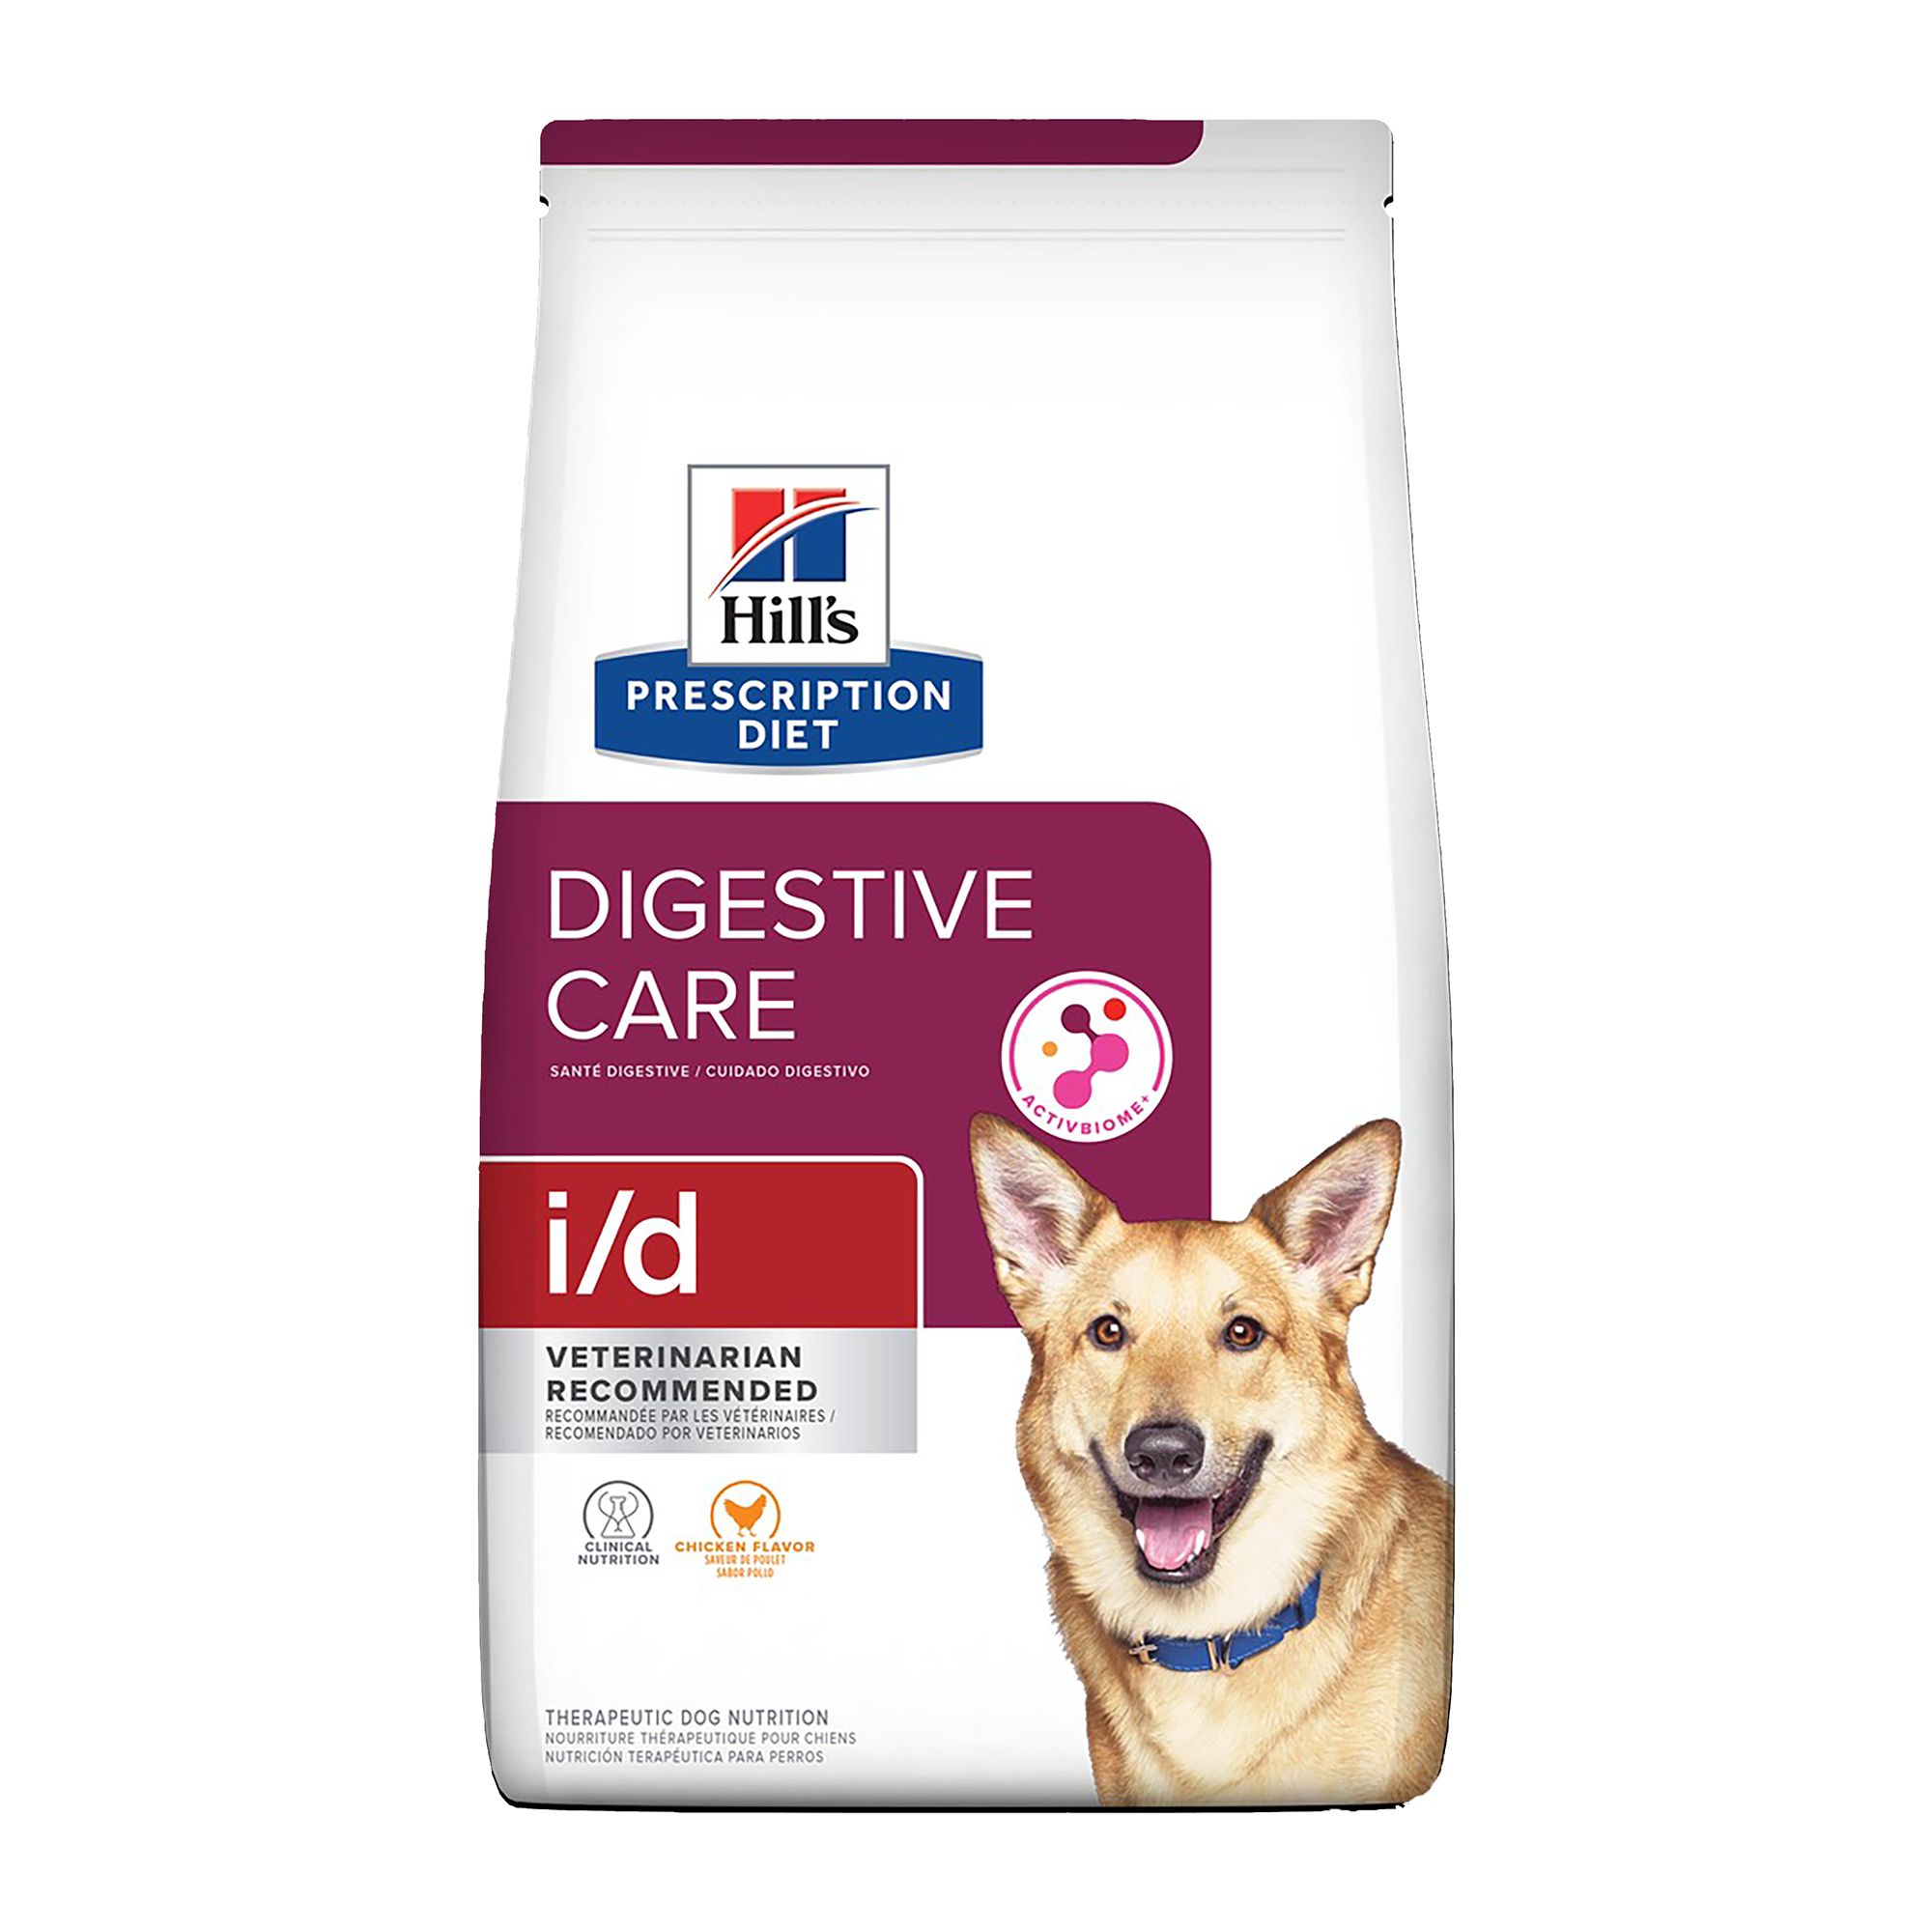 Digestive Care Dog Food 